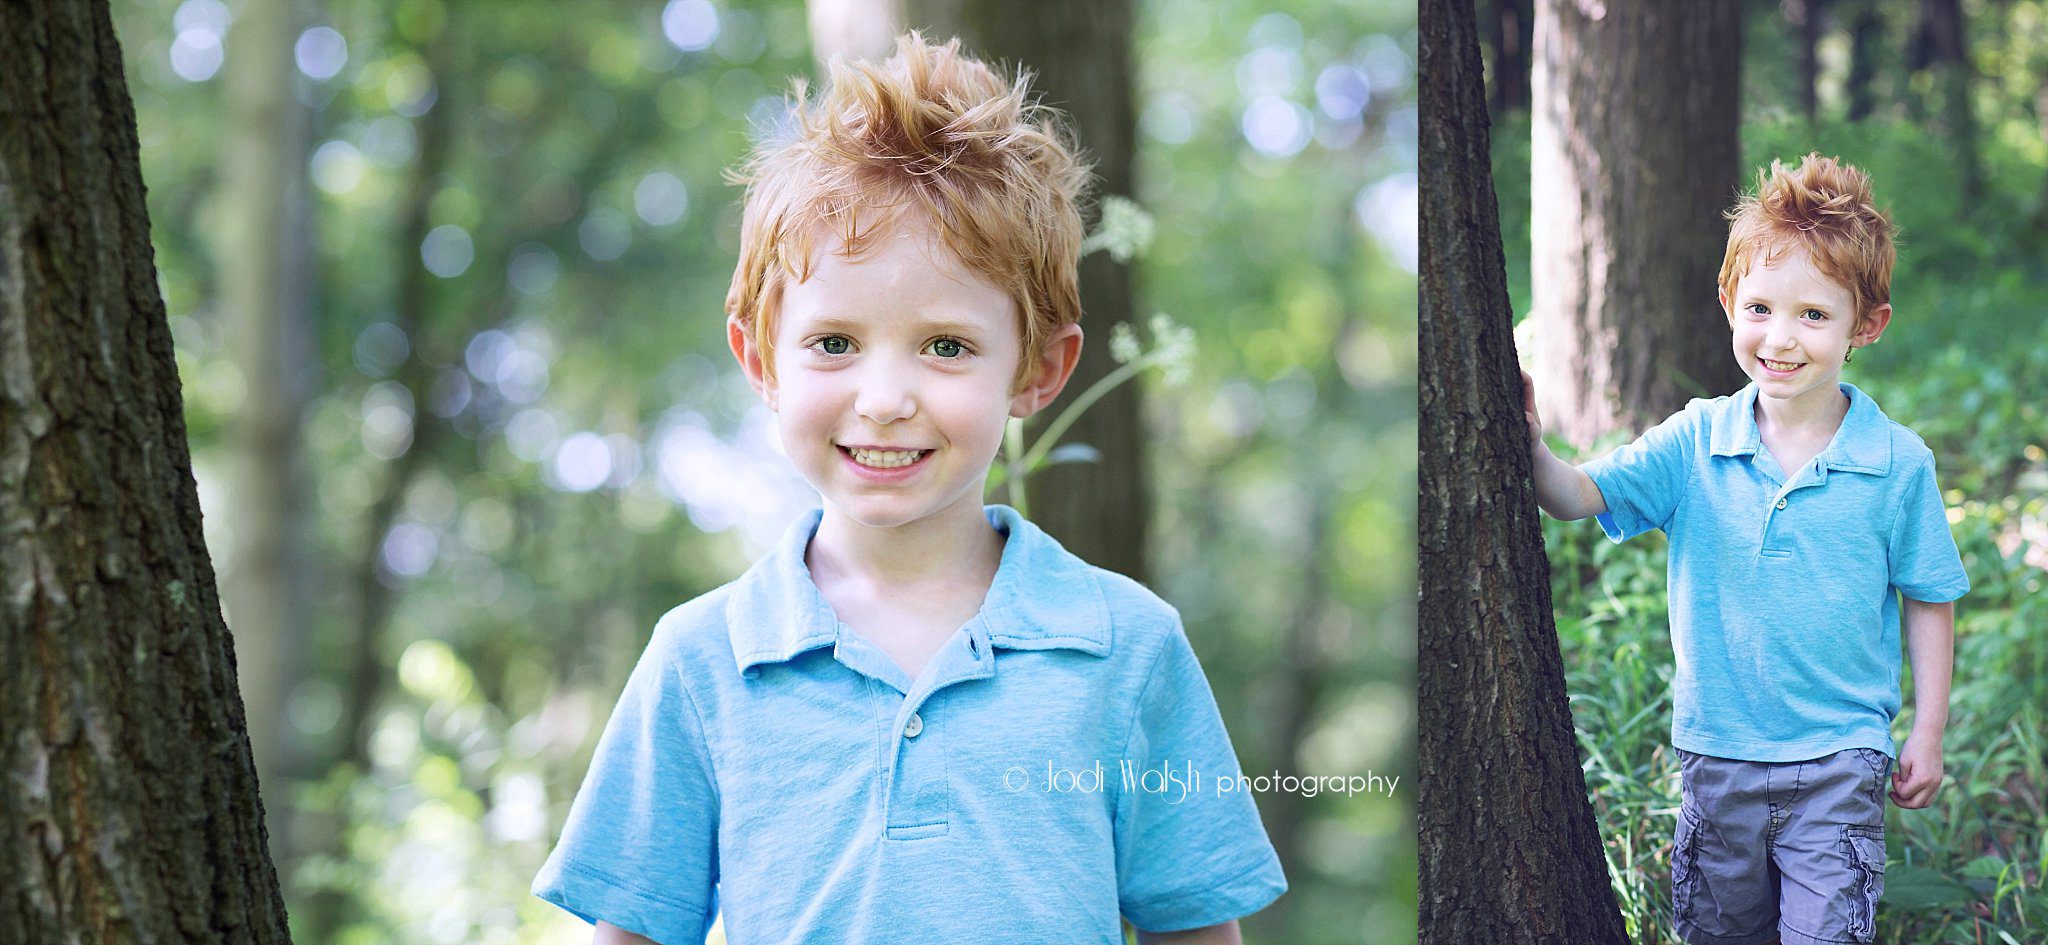 portrait of a little boy in blue 3 button shirt